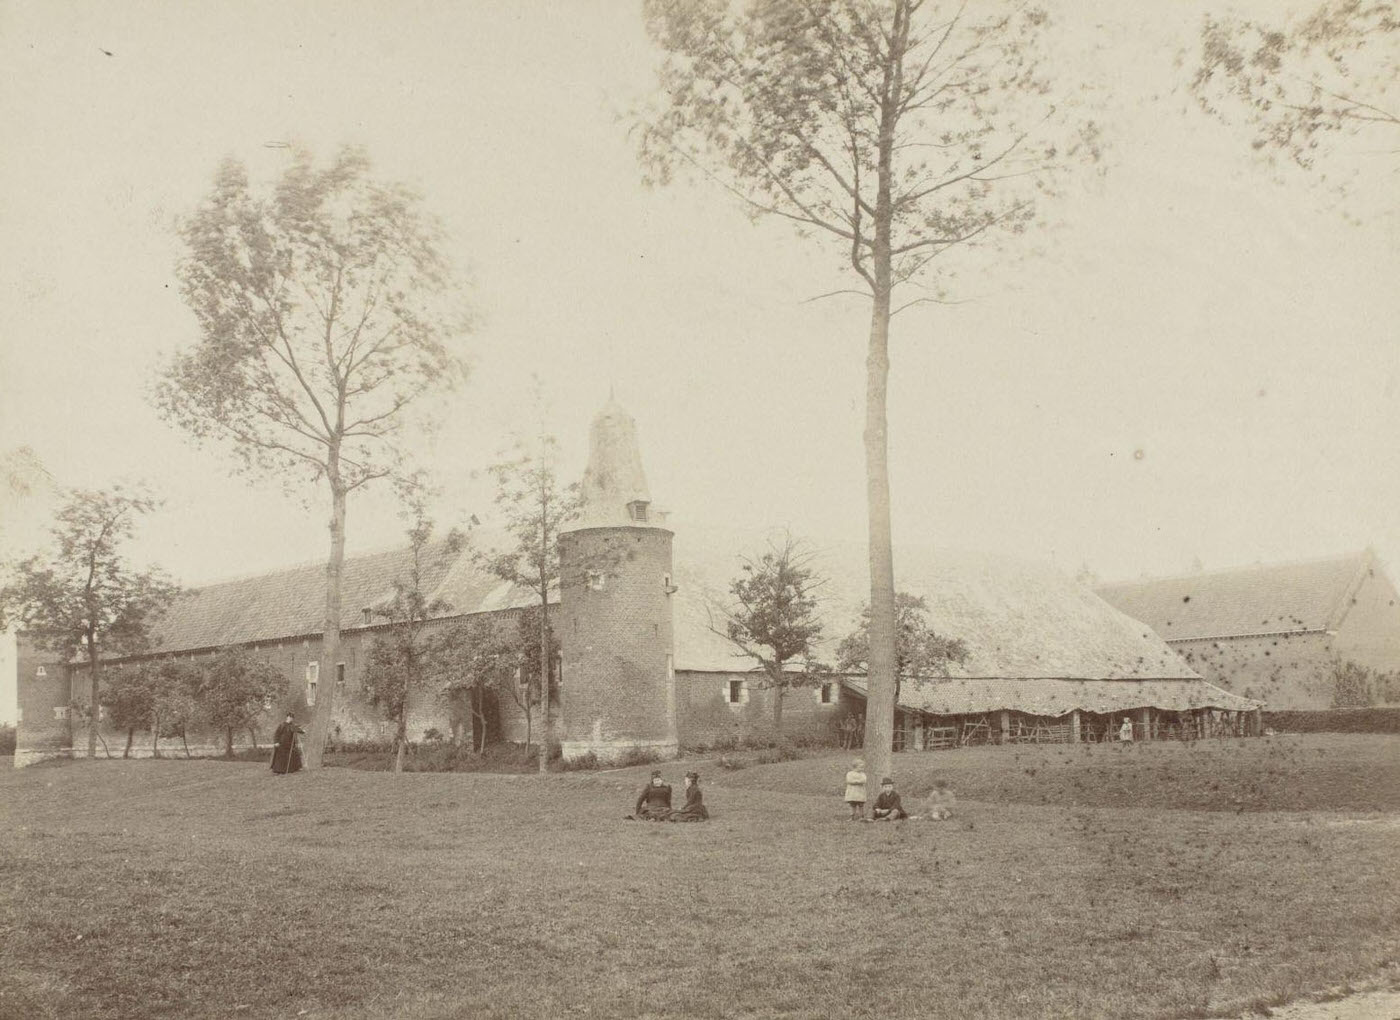 Harrelstein Farmhouse in Bunde, Seated Figures in Foreground, 1893